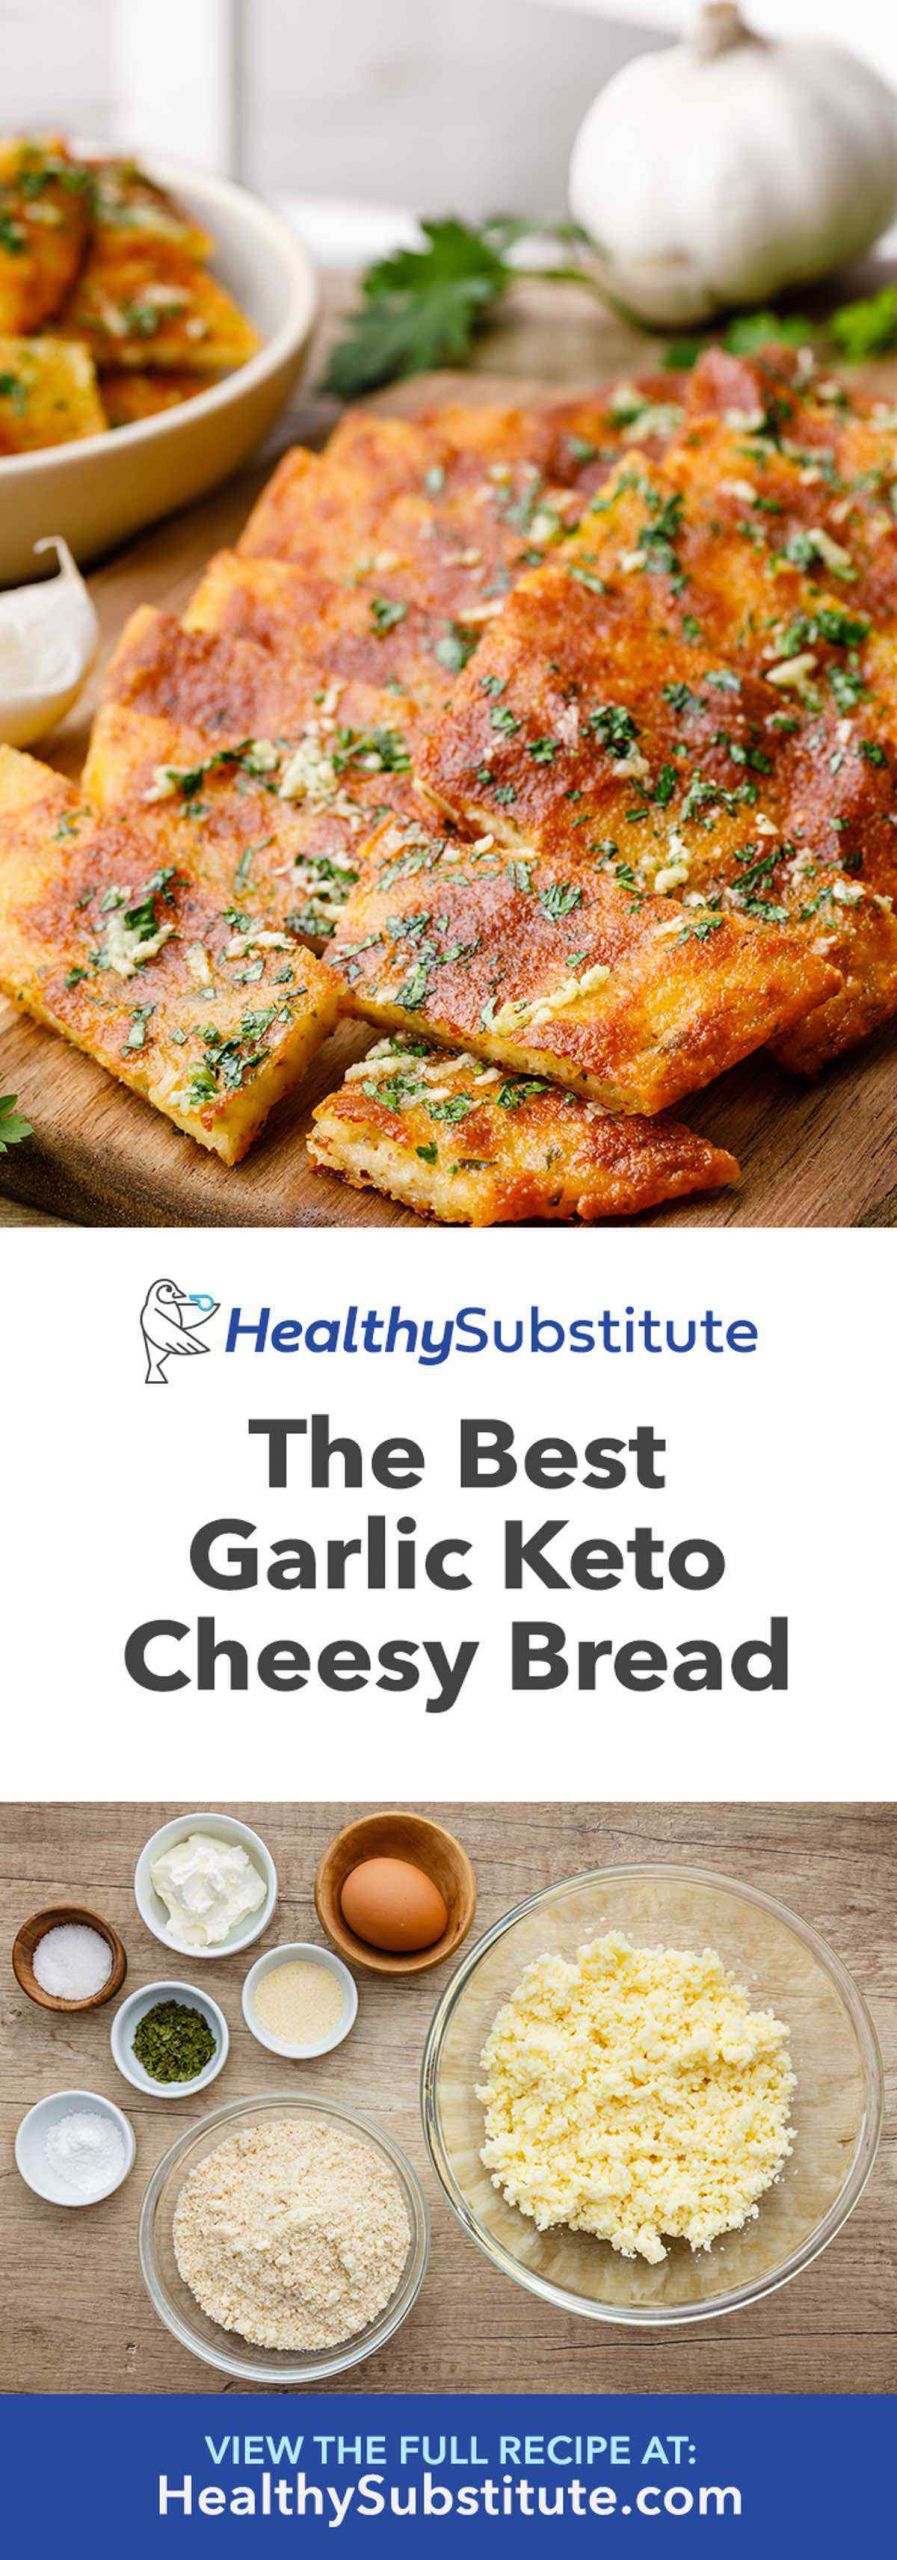 Keto Garlic Bread Low Carb
 The Most Addictive Garlic Keto Cheesy Bread Ever OMG